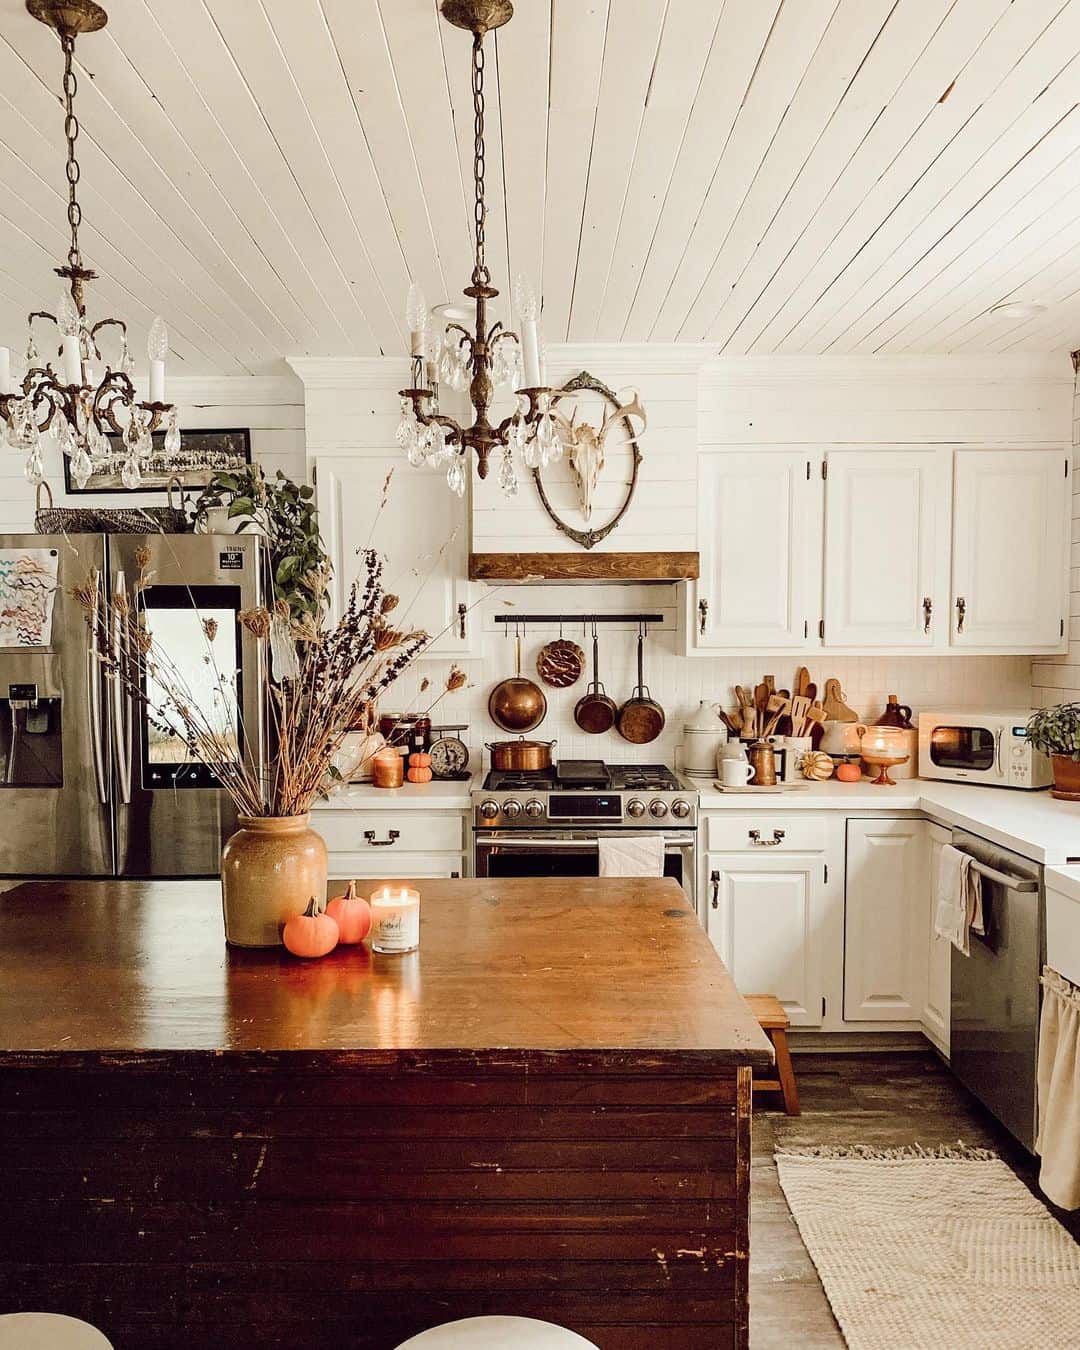 Rustic Farmhouse Kitchen with Copper Accessories - Soul & Lane